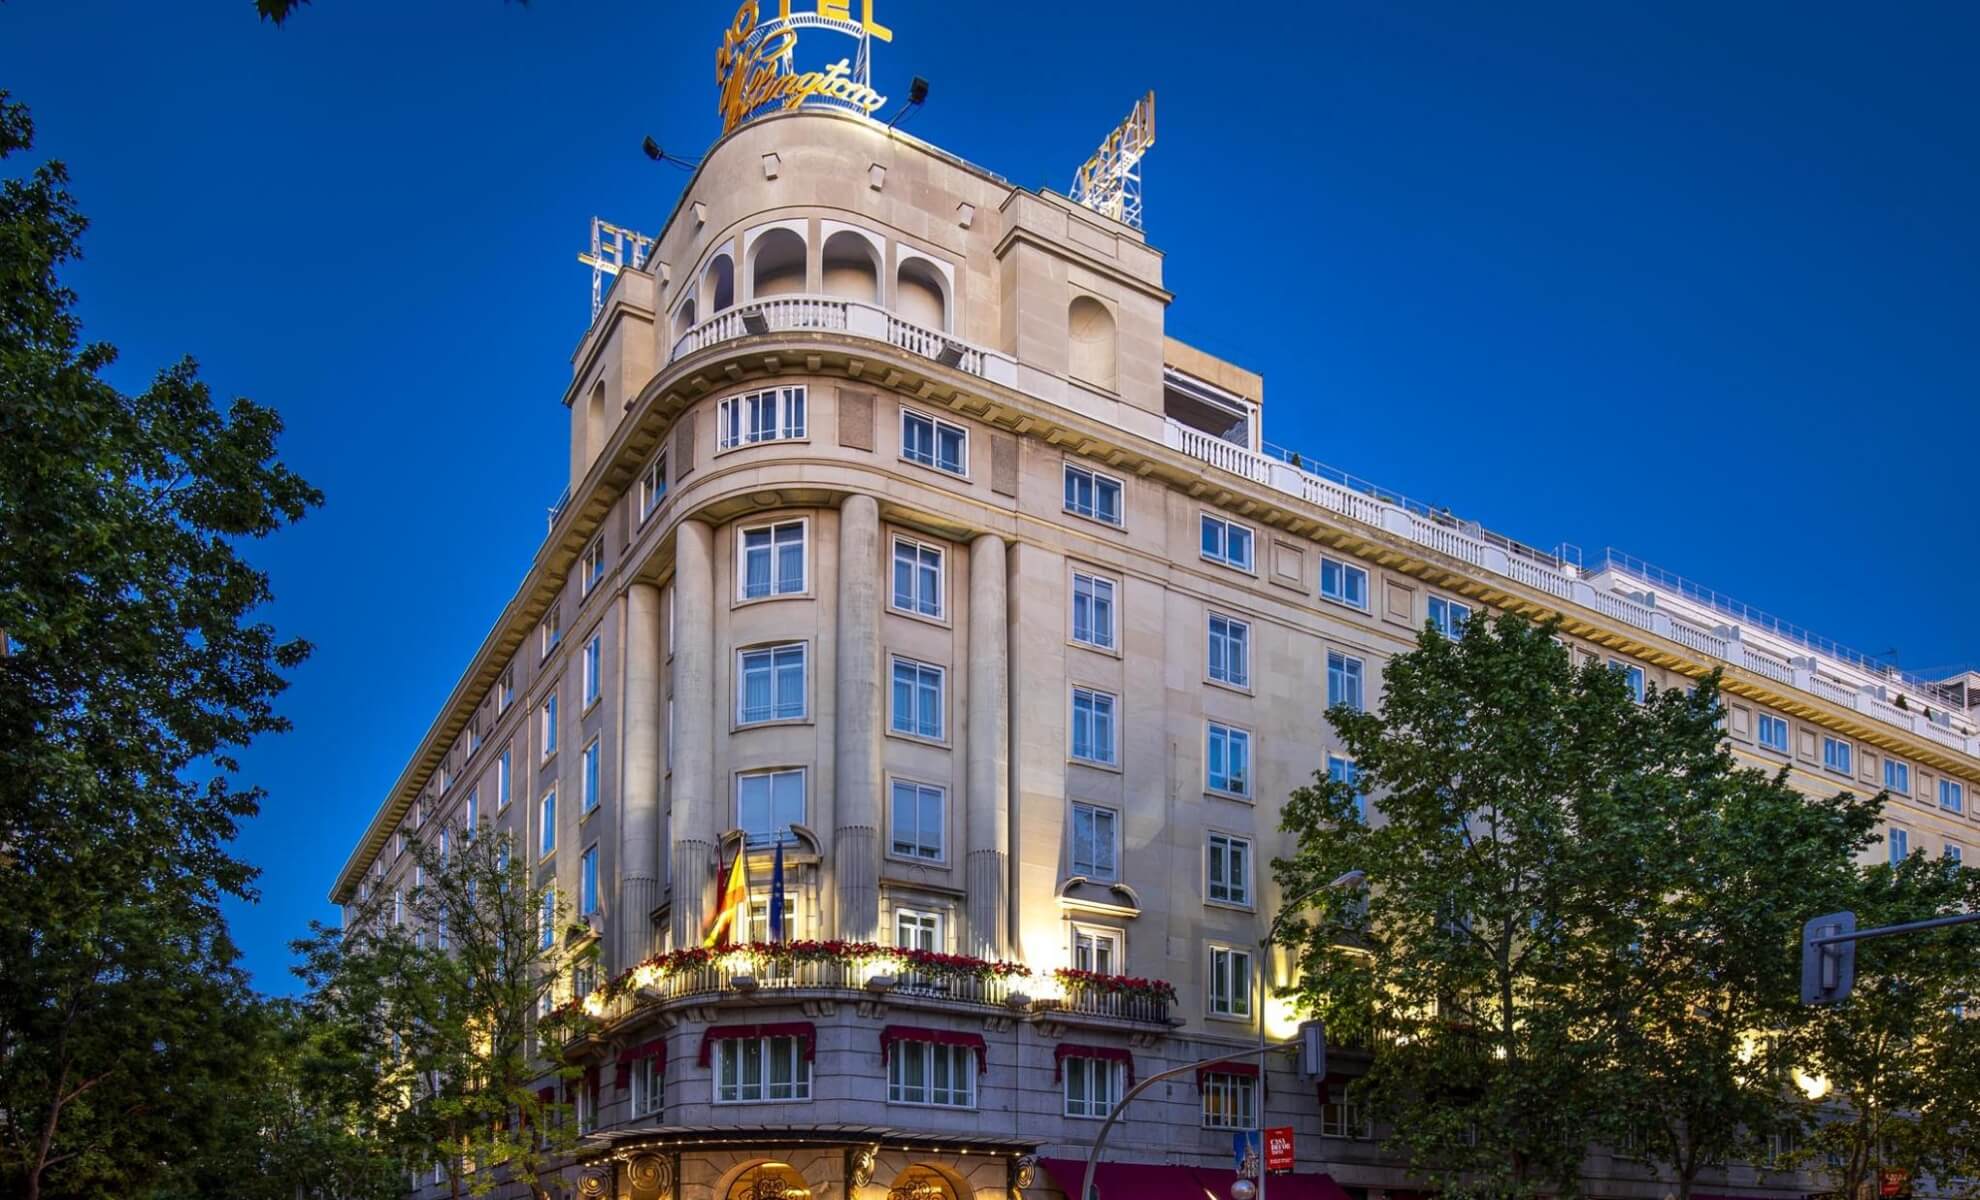 Wellington Hotel & Spa, Madrid en Espagne